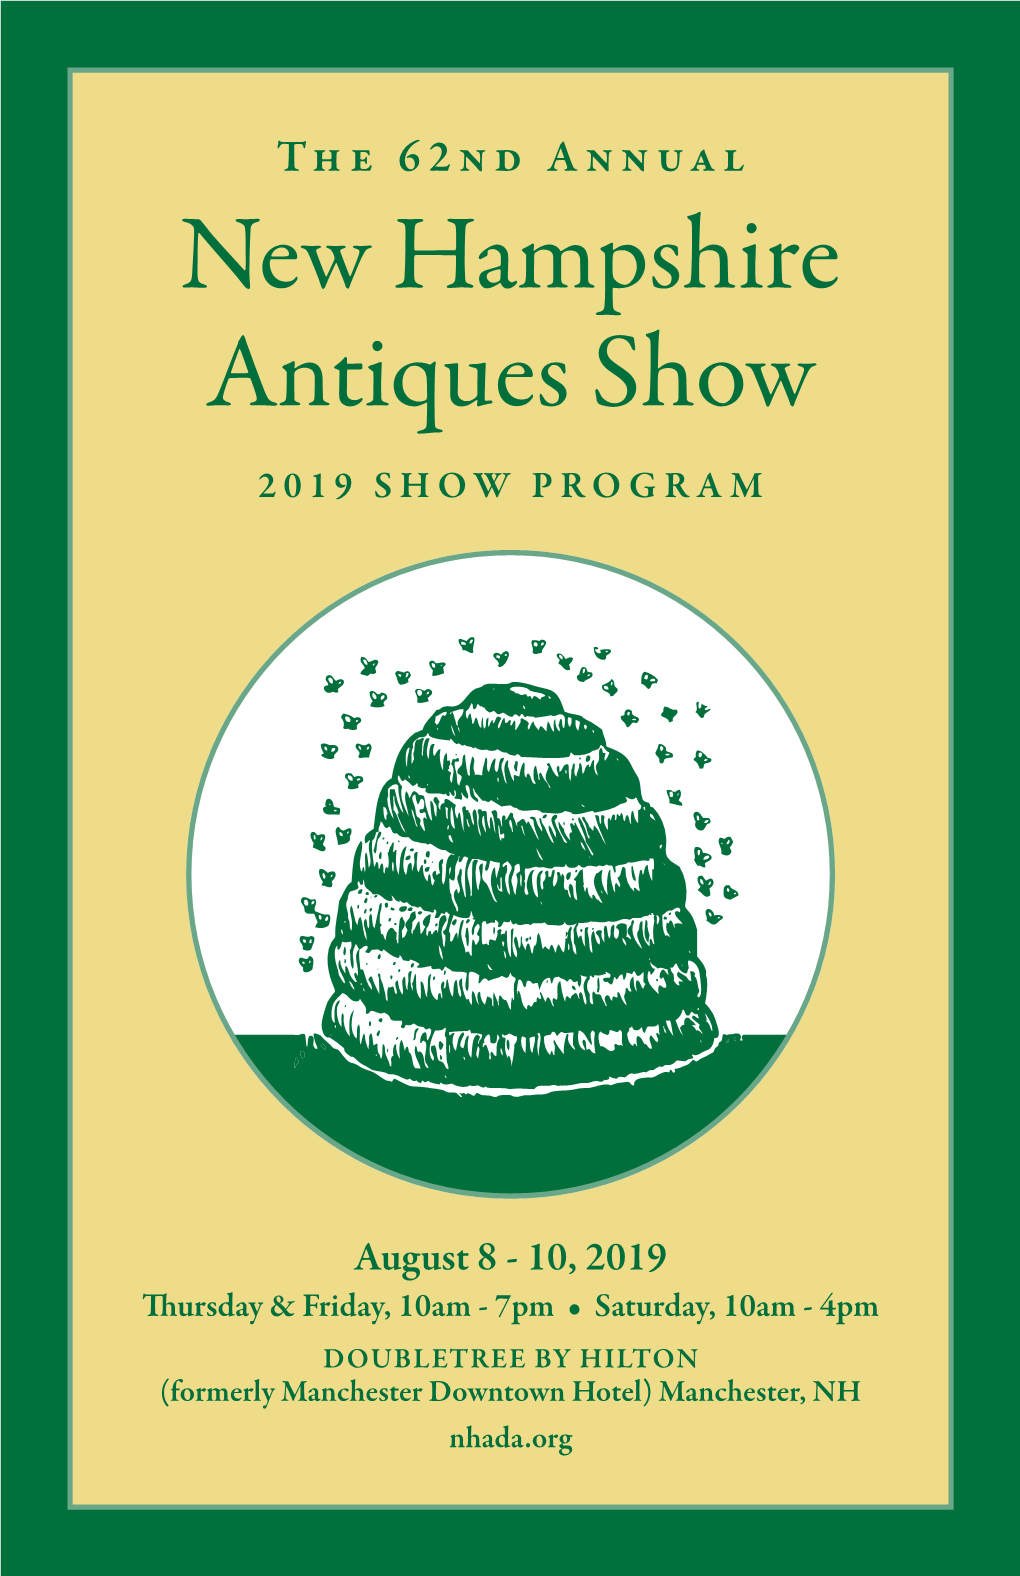 New Hampshire Antiques Show 2019 SHOW PROGRAM